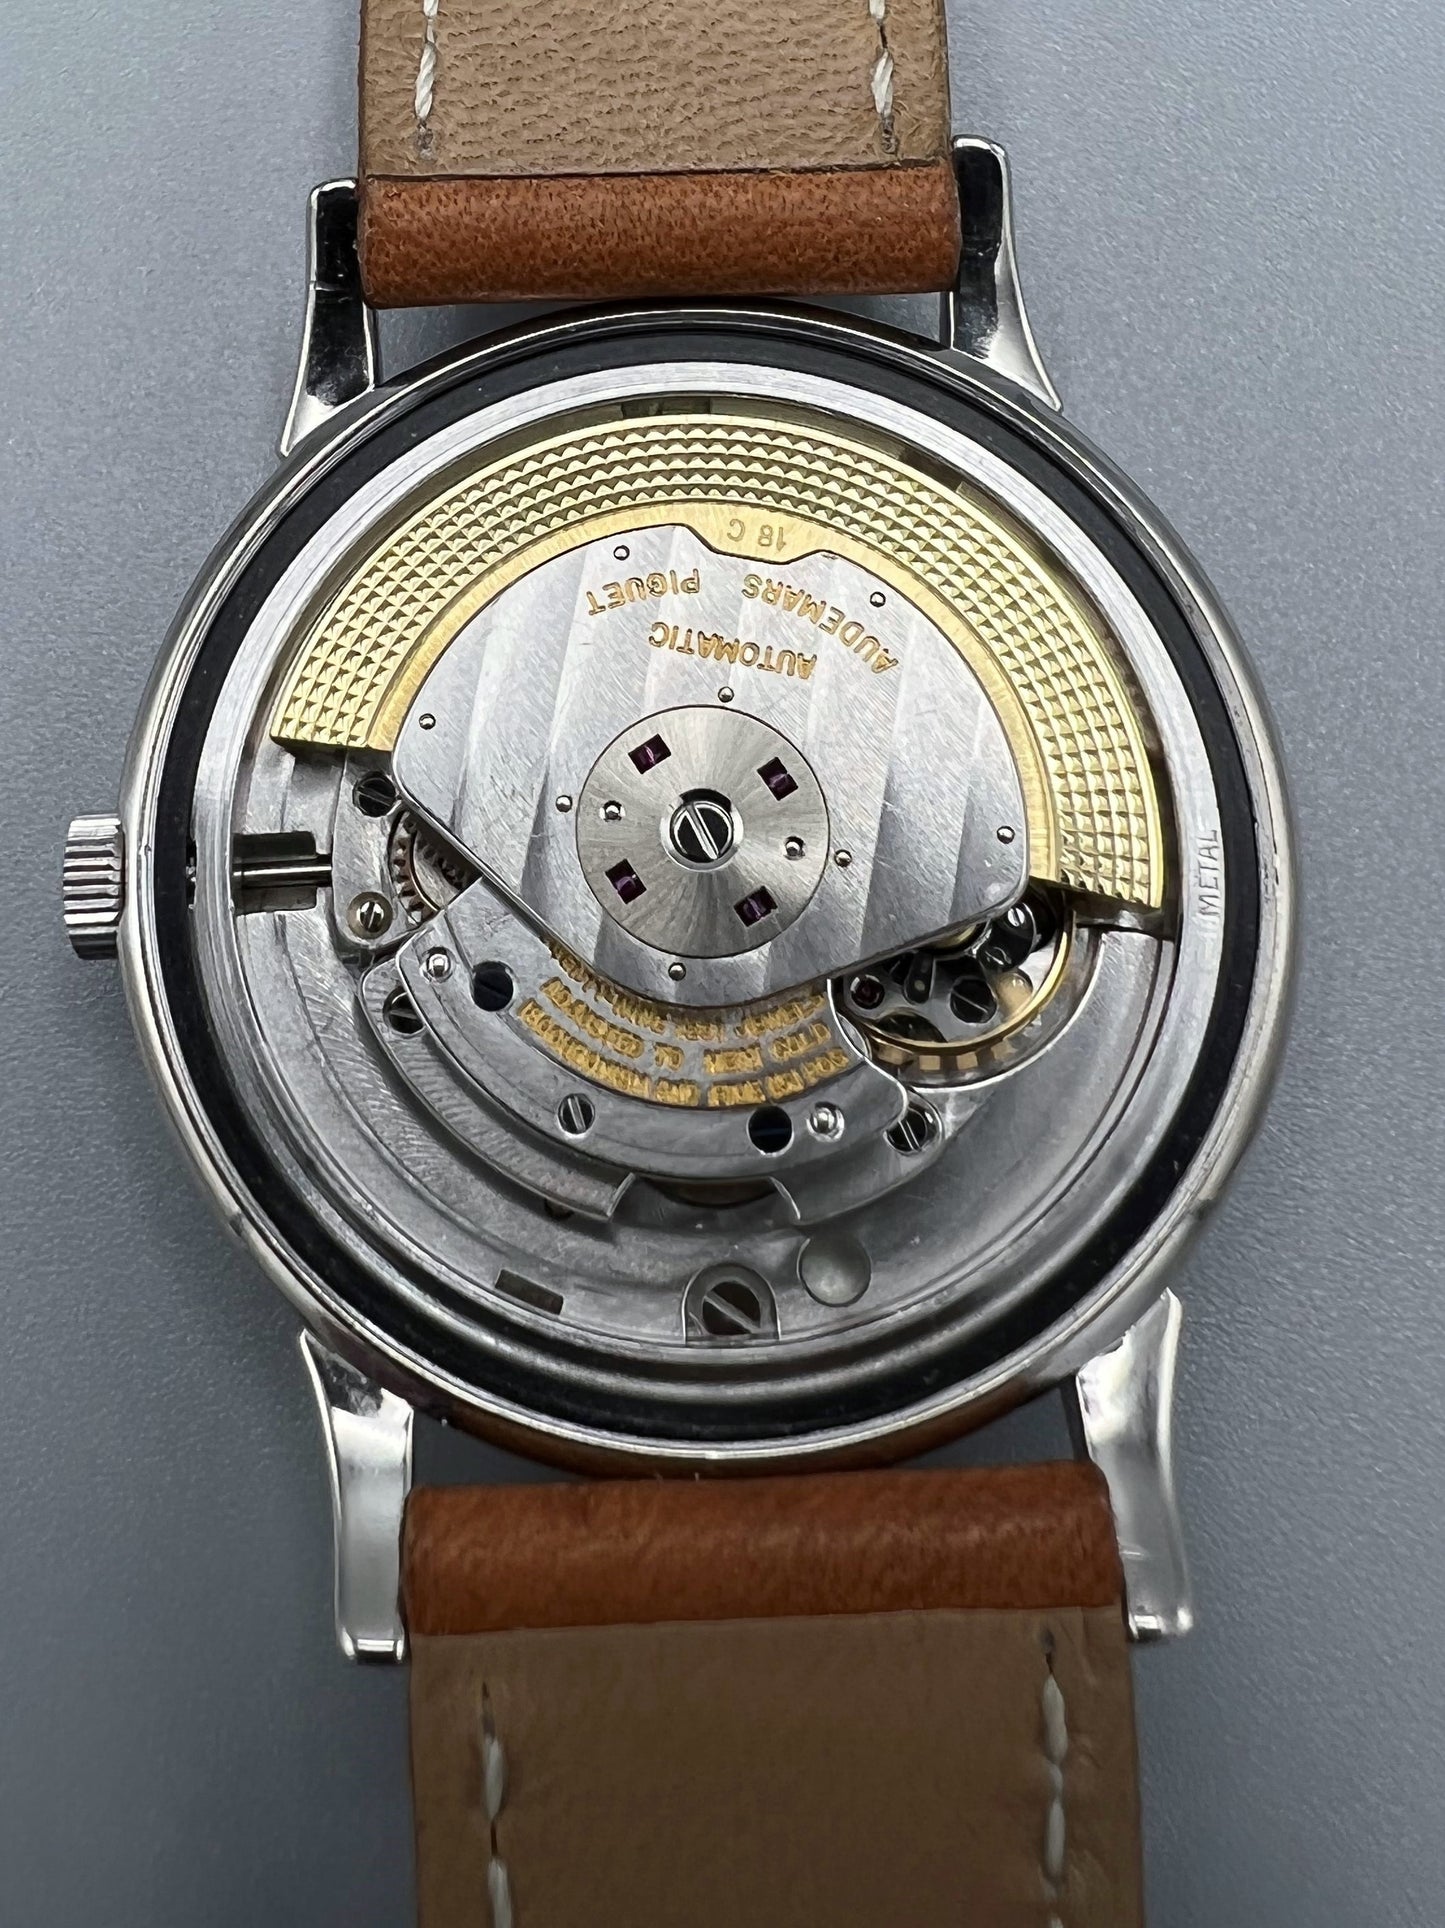 Audemars Piguet Rare, Automatic, White Gold Calatrava Style Watch 1950s